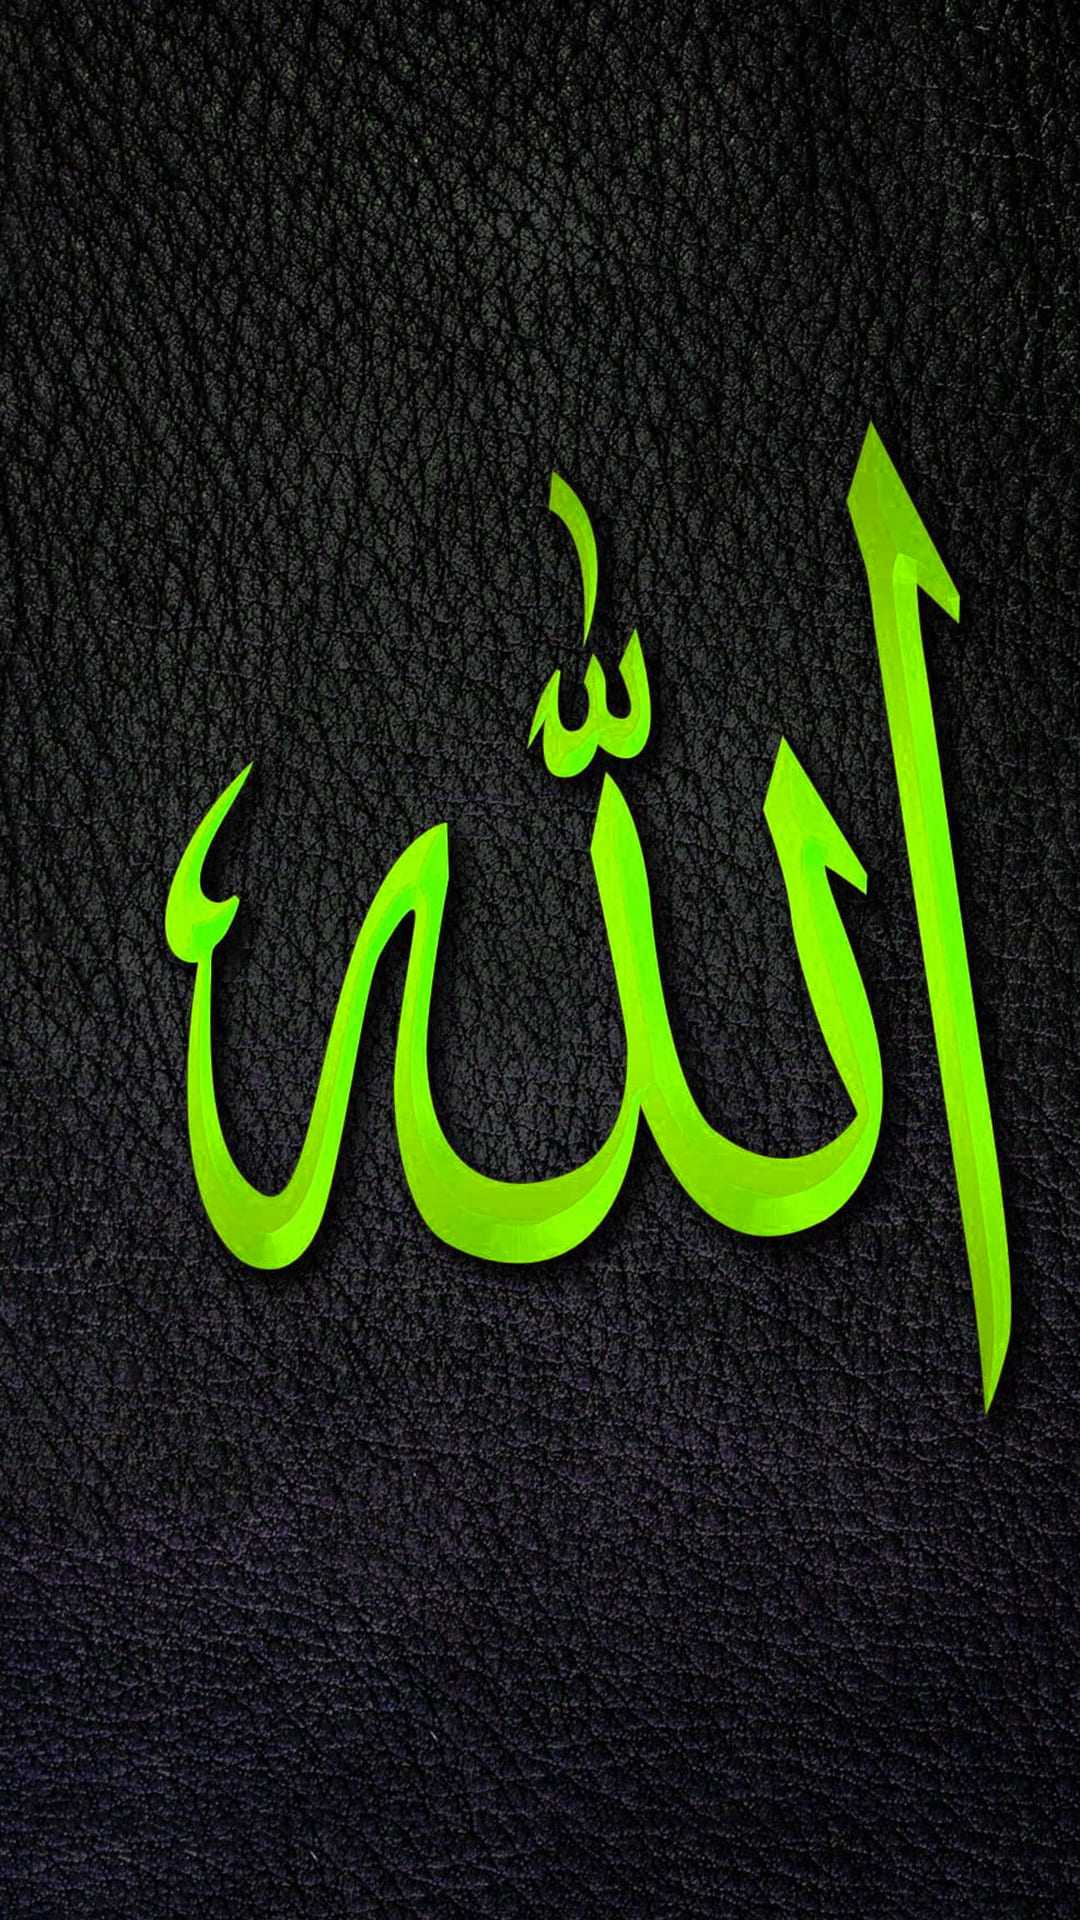 Allah Name Live Wallpaper HD: Allah Wallpapers 3D APK (Android App) - Free  Download